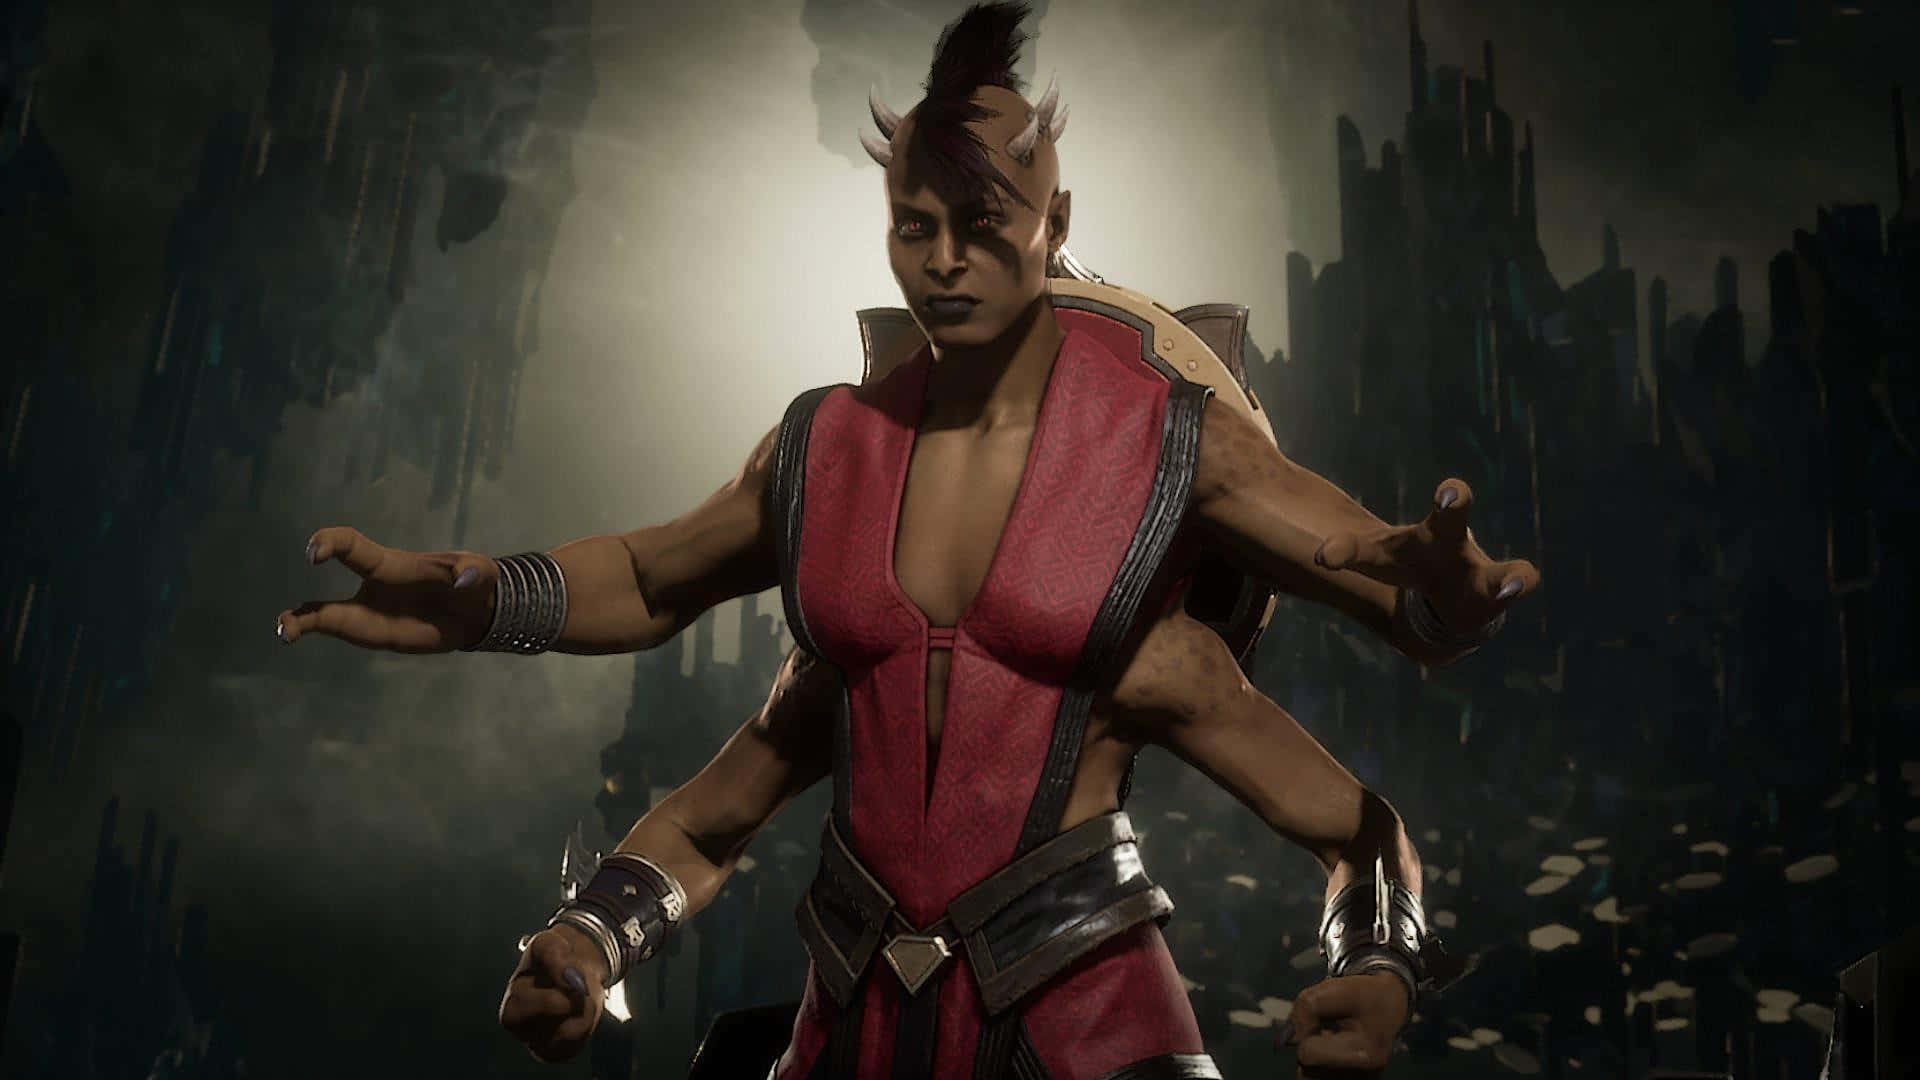 Sheeva,la Feroz Guerrera Shokan De Cuatro Brazos En Mortal Kombat. Fondo de pantalla